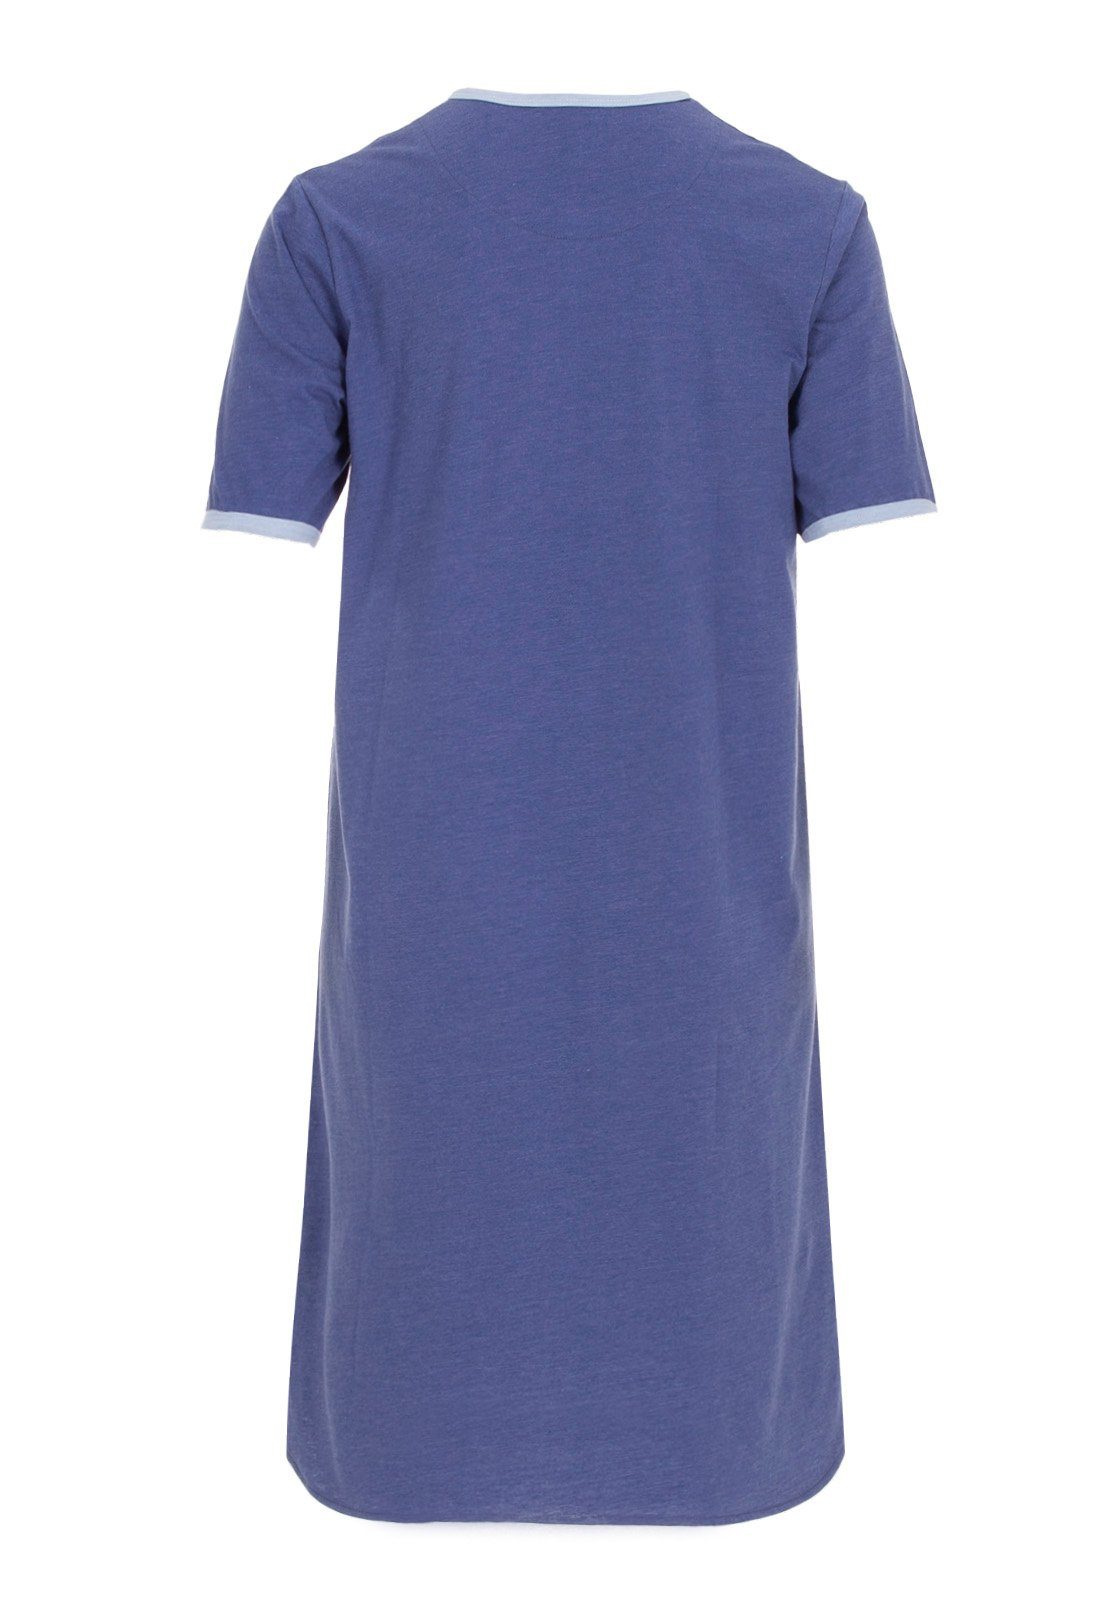 Henry Terre Kurzarm - blau Nachthemd Nachthemd Uni